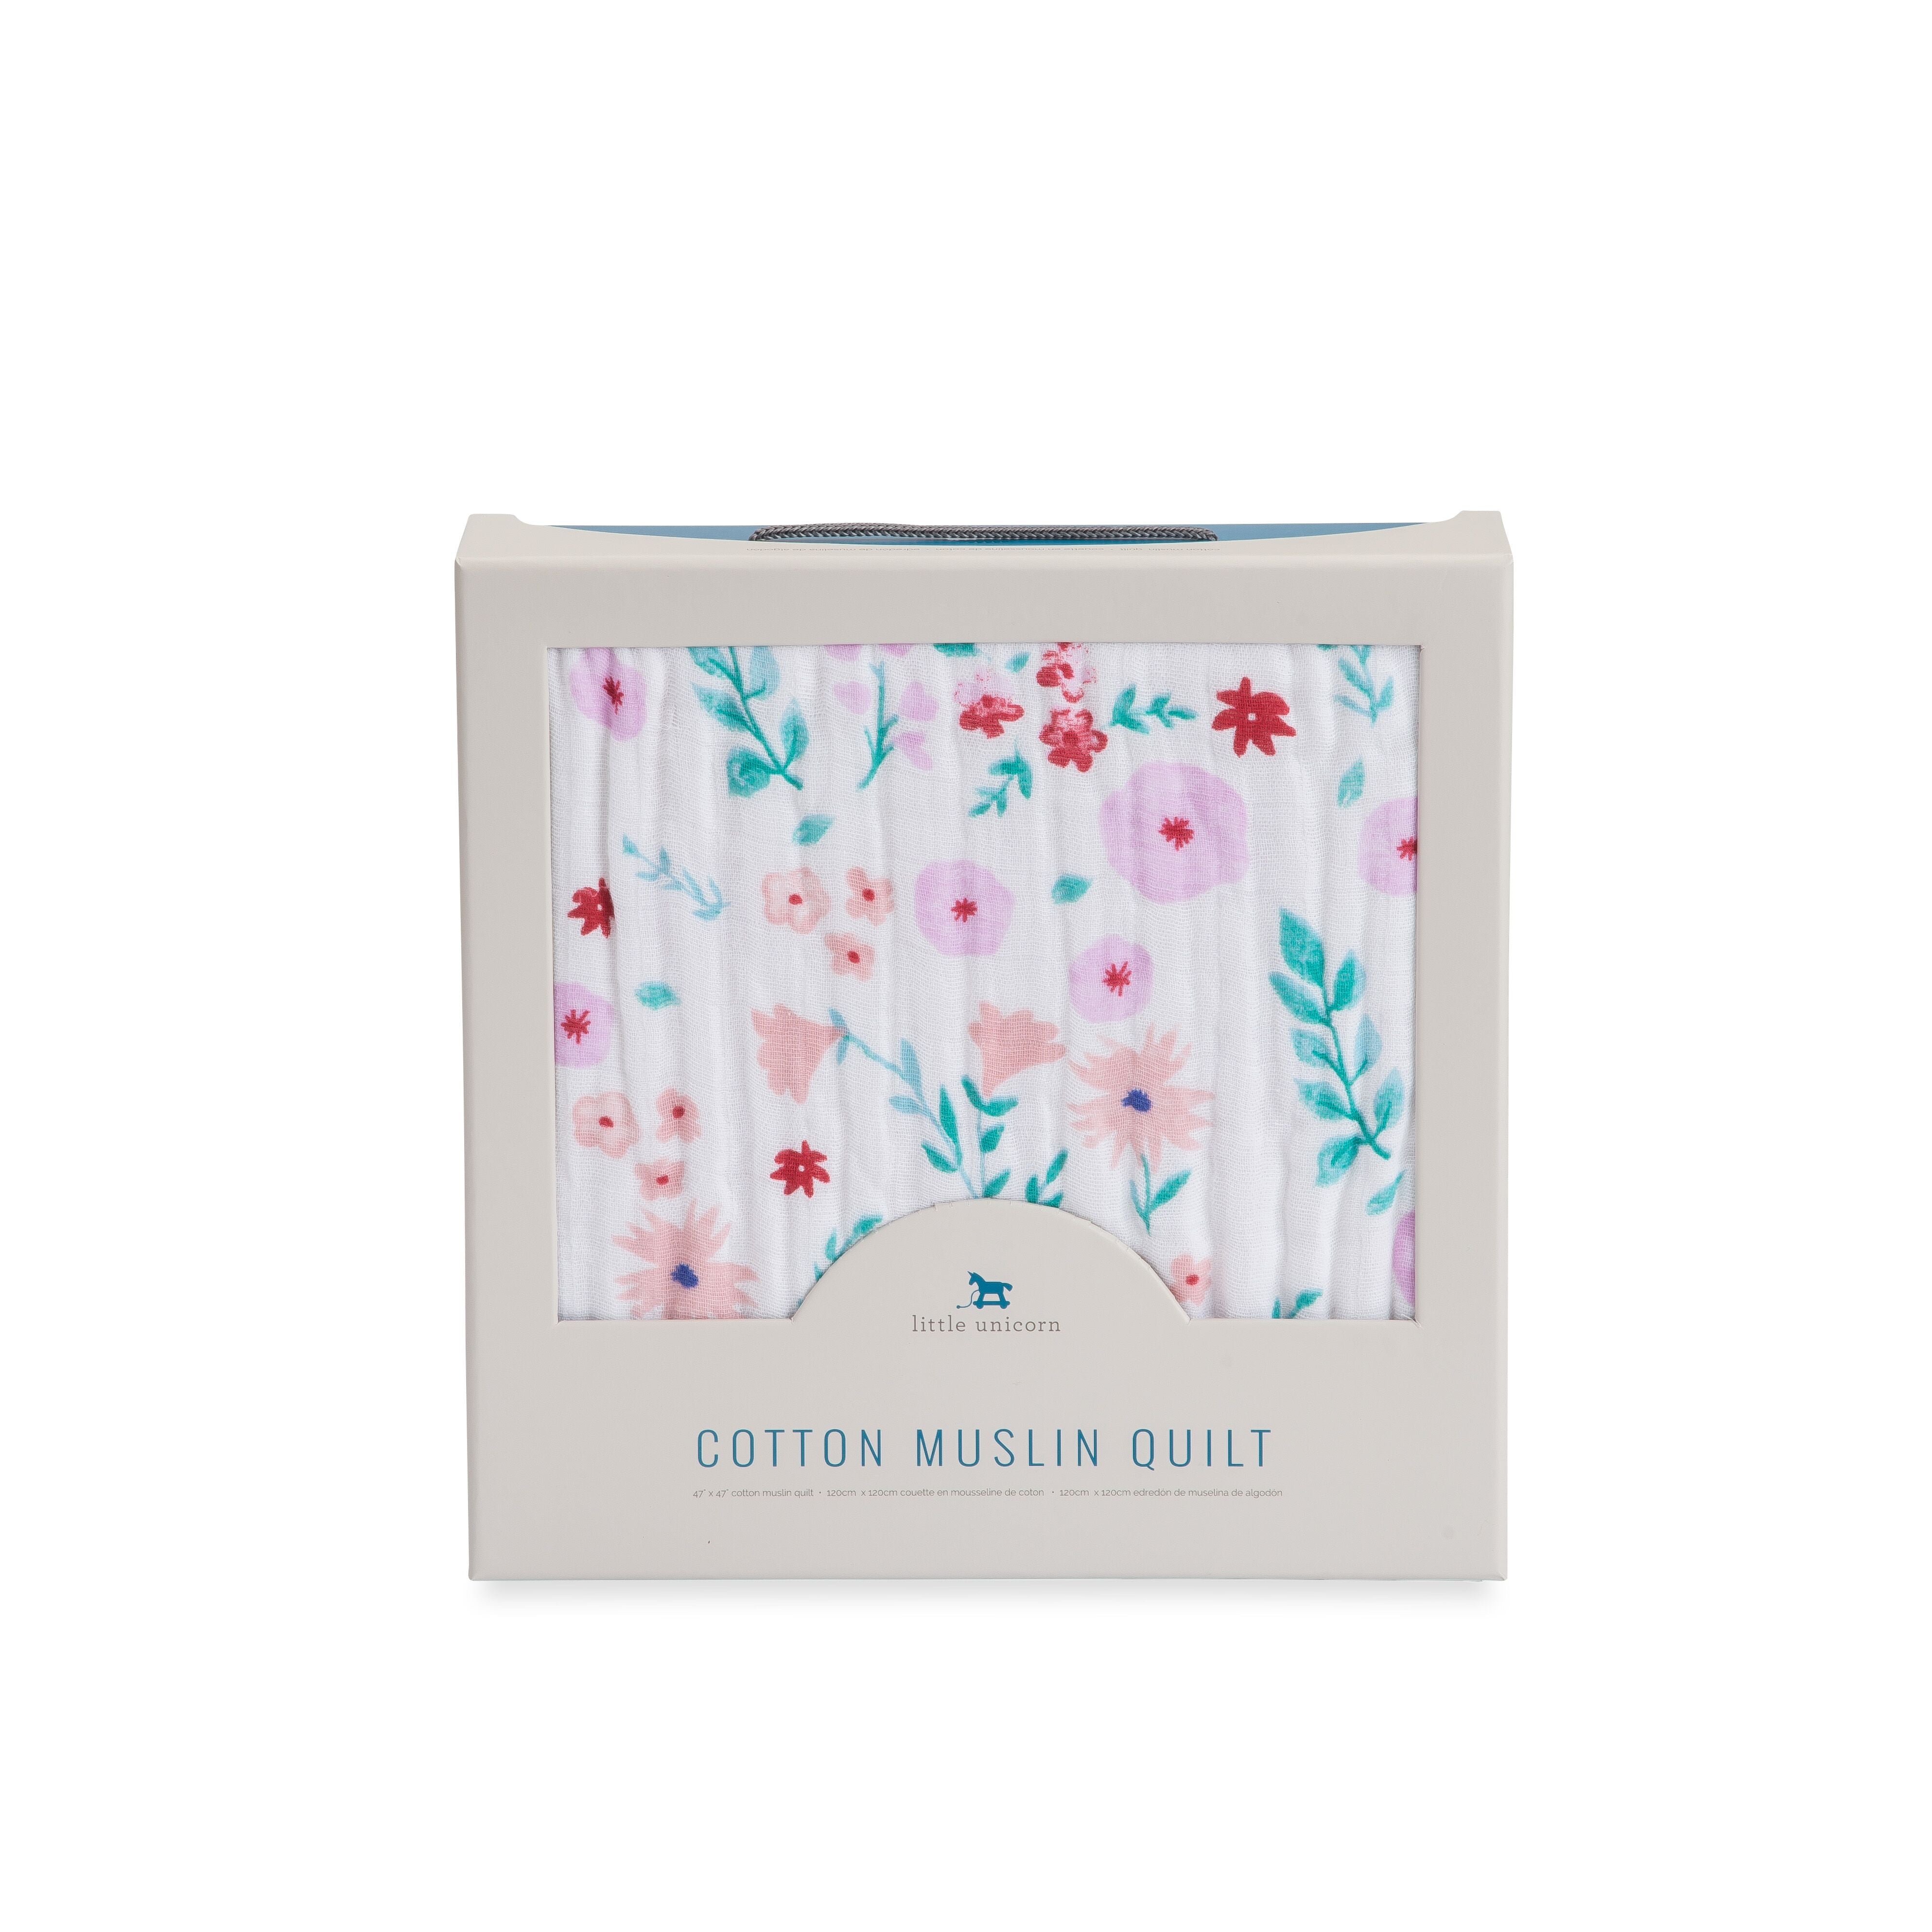 Little Unicorn Cotton Muslin Quilt - Morning Glory